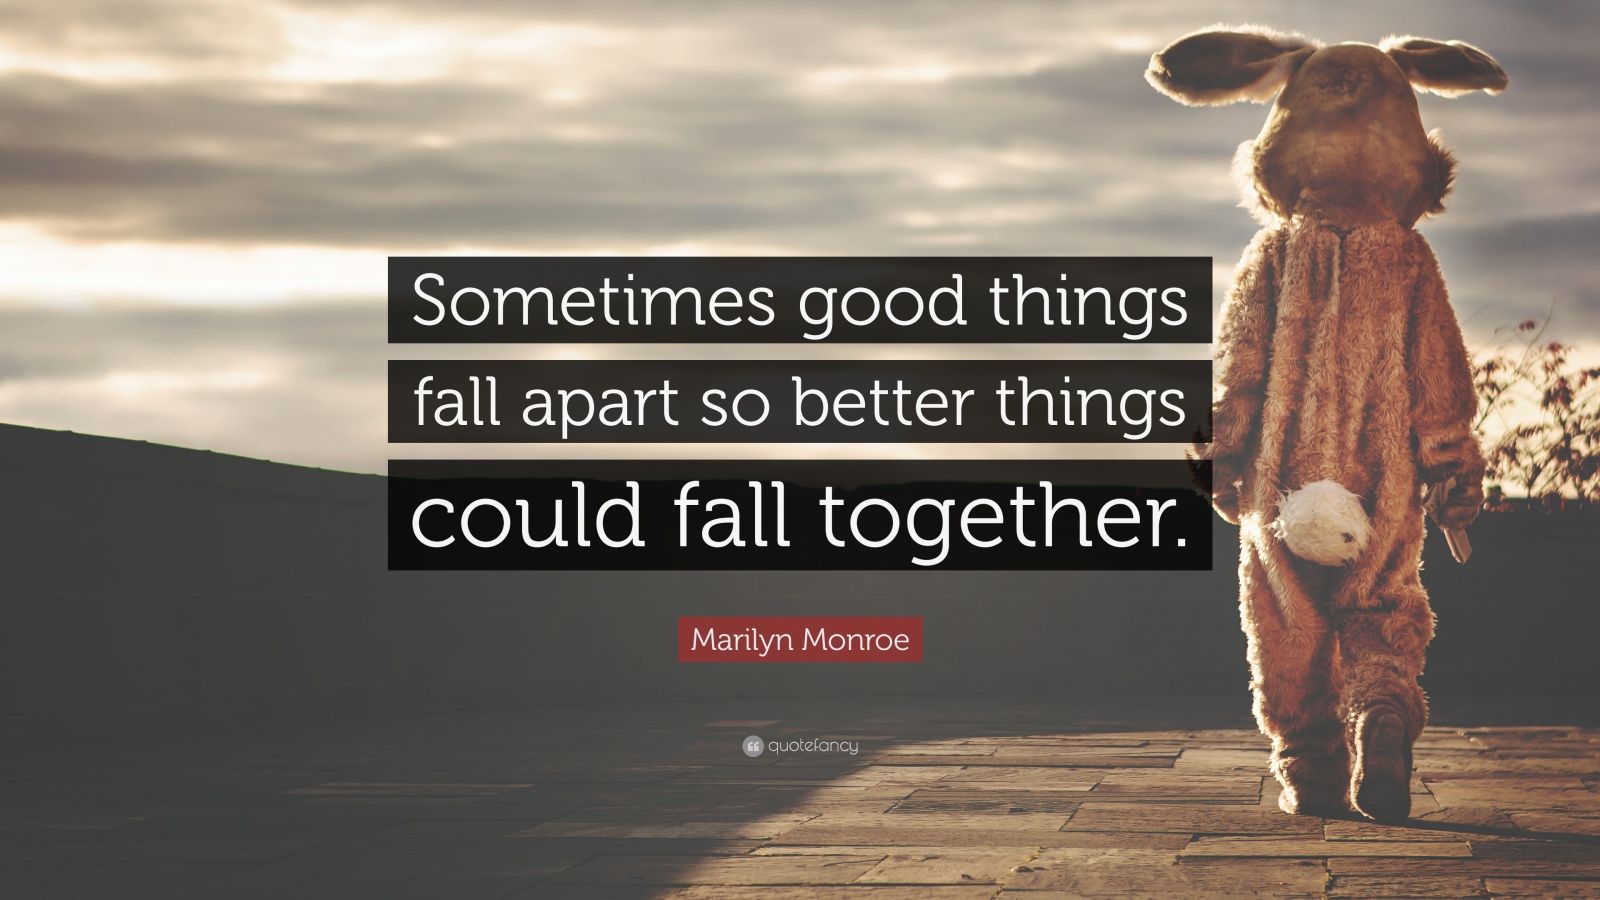 all good things fall apart